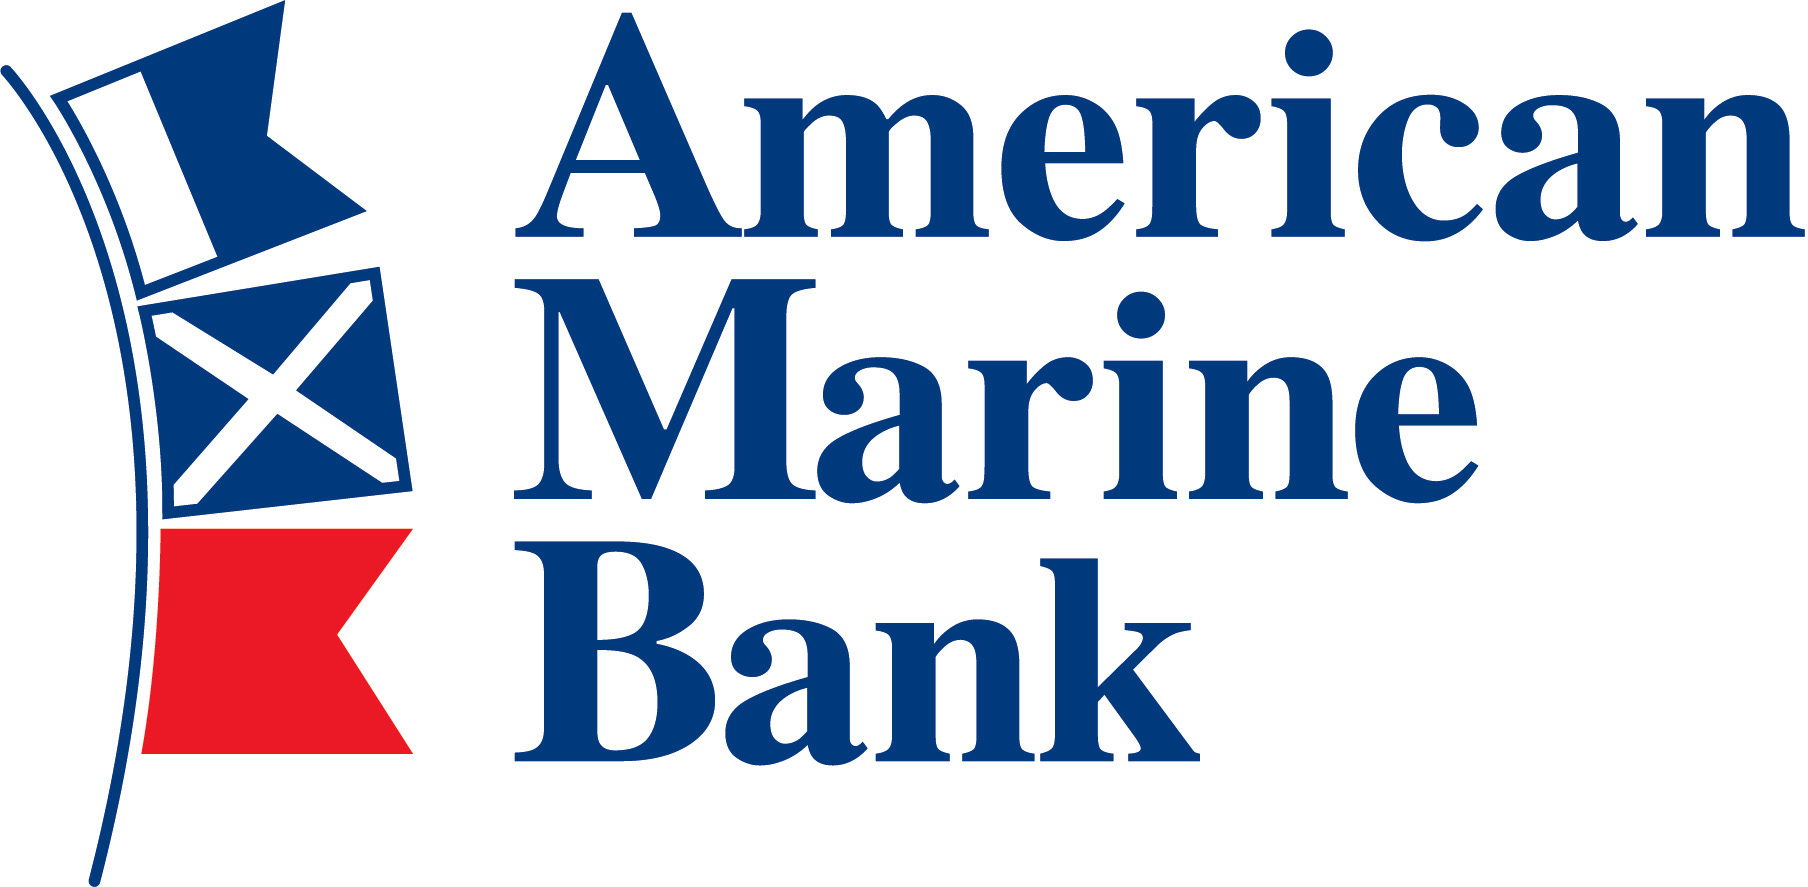 American Marine Bank